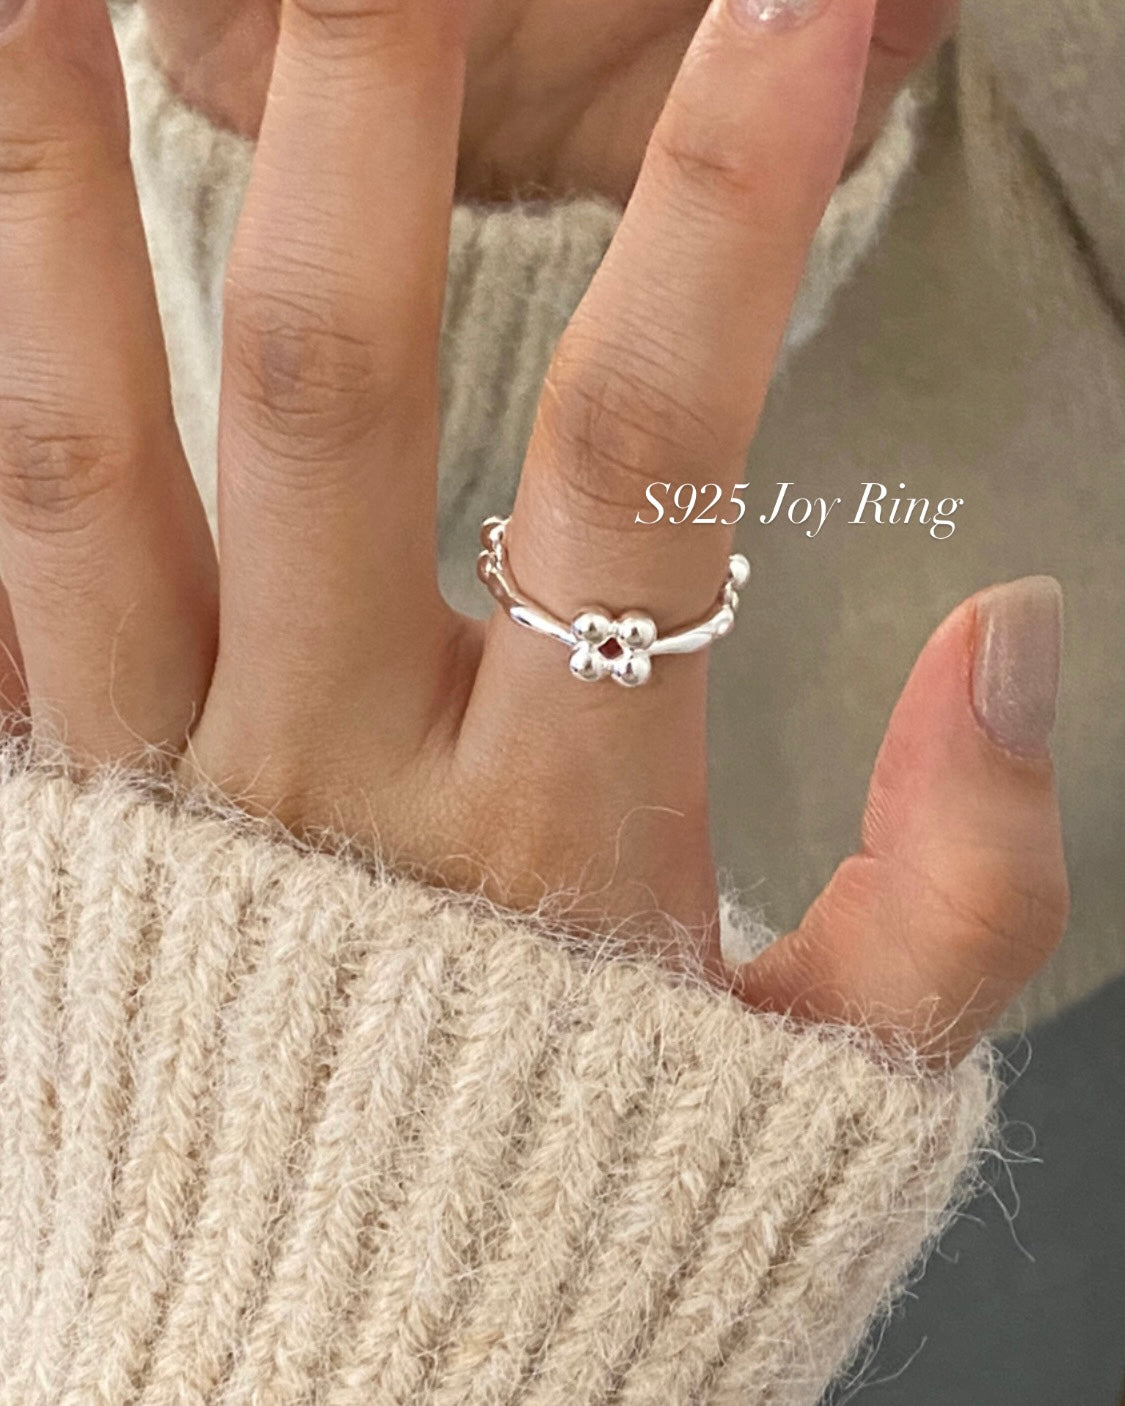 [925silver] Joy Ring